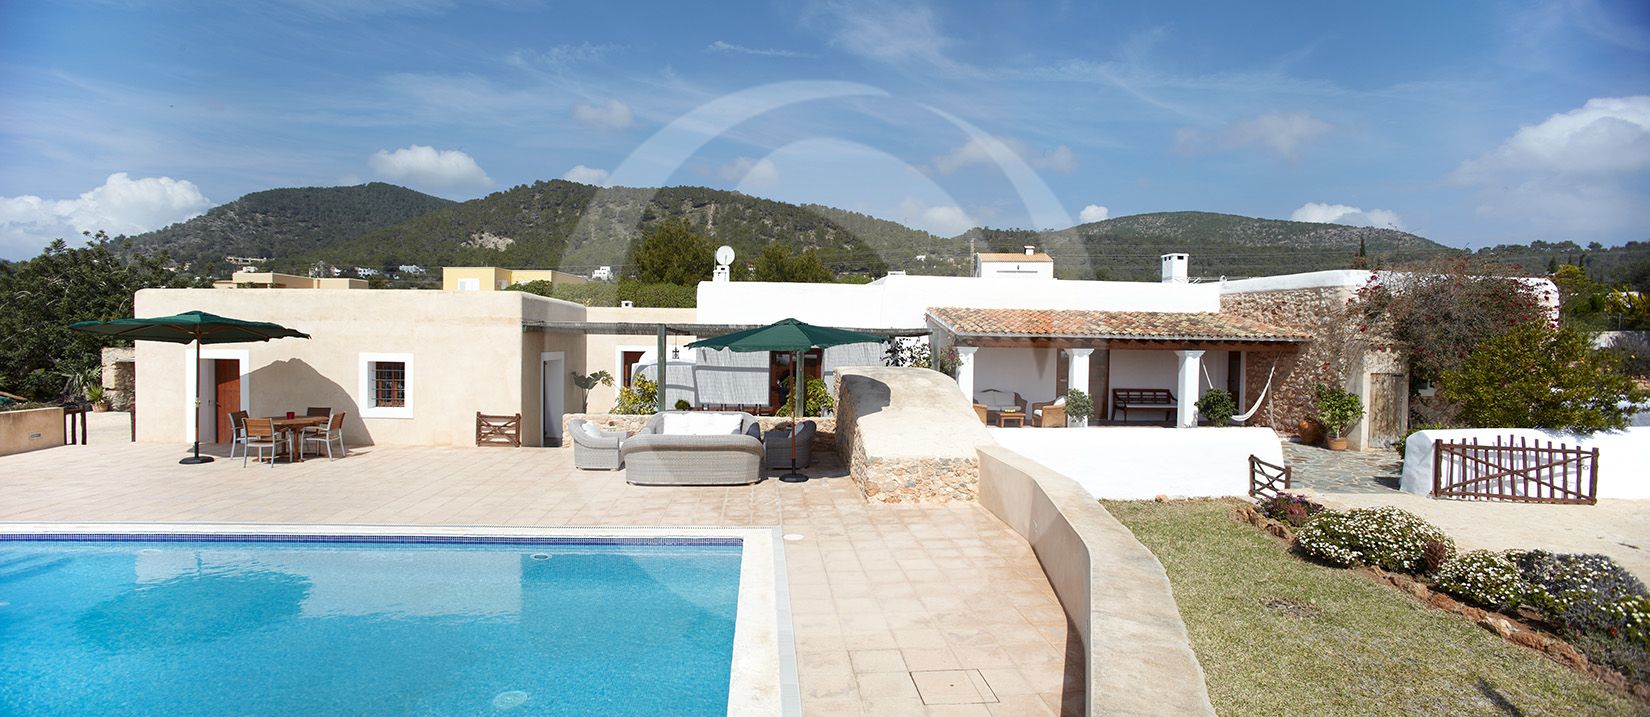 Villa Paz. 6 bedrooms villa in Ibiza for rent